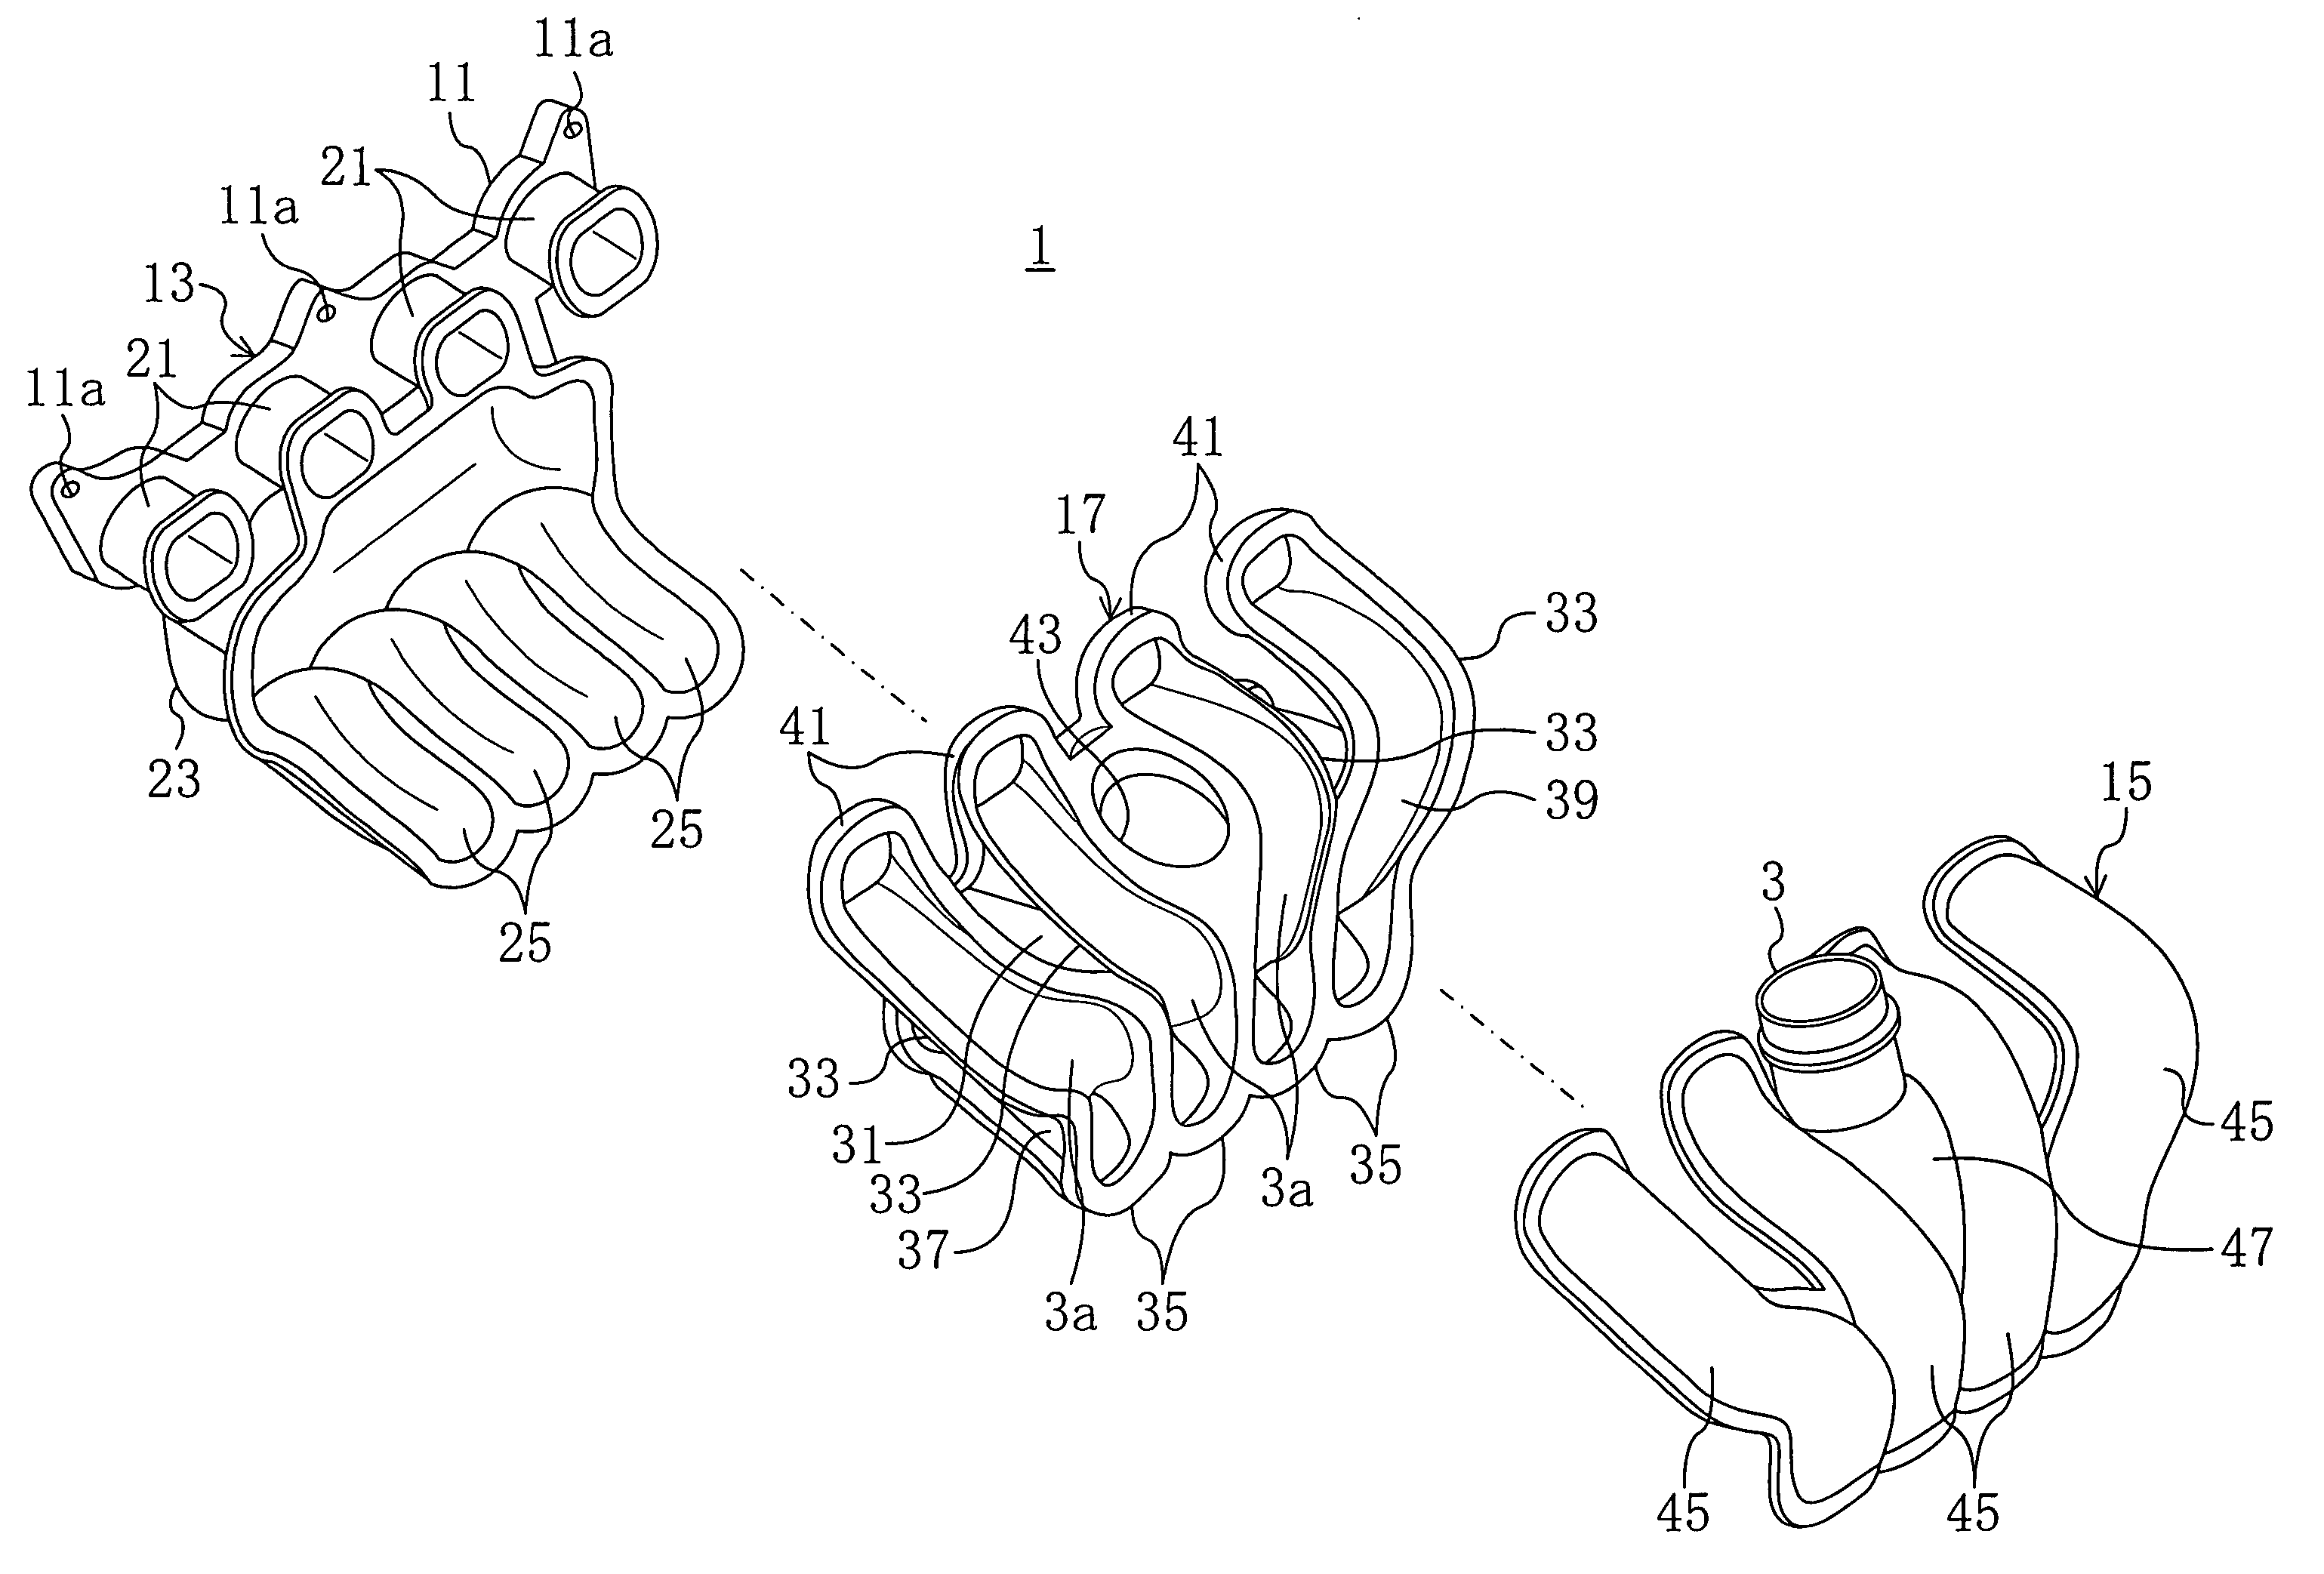 Resin intake manifold for multicylinder engine